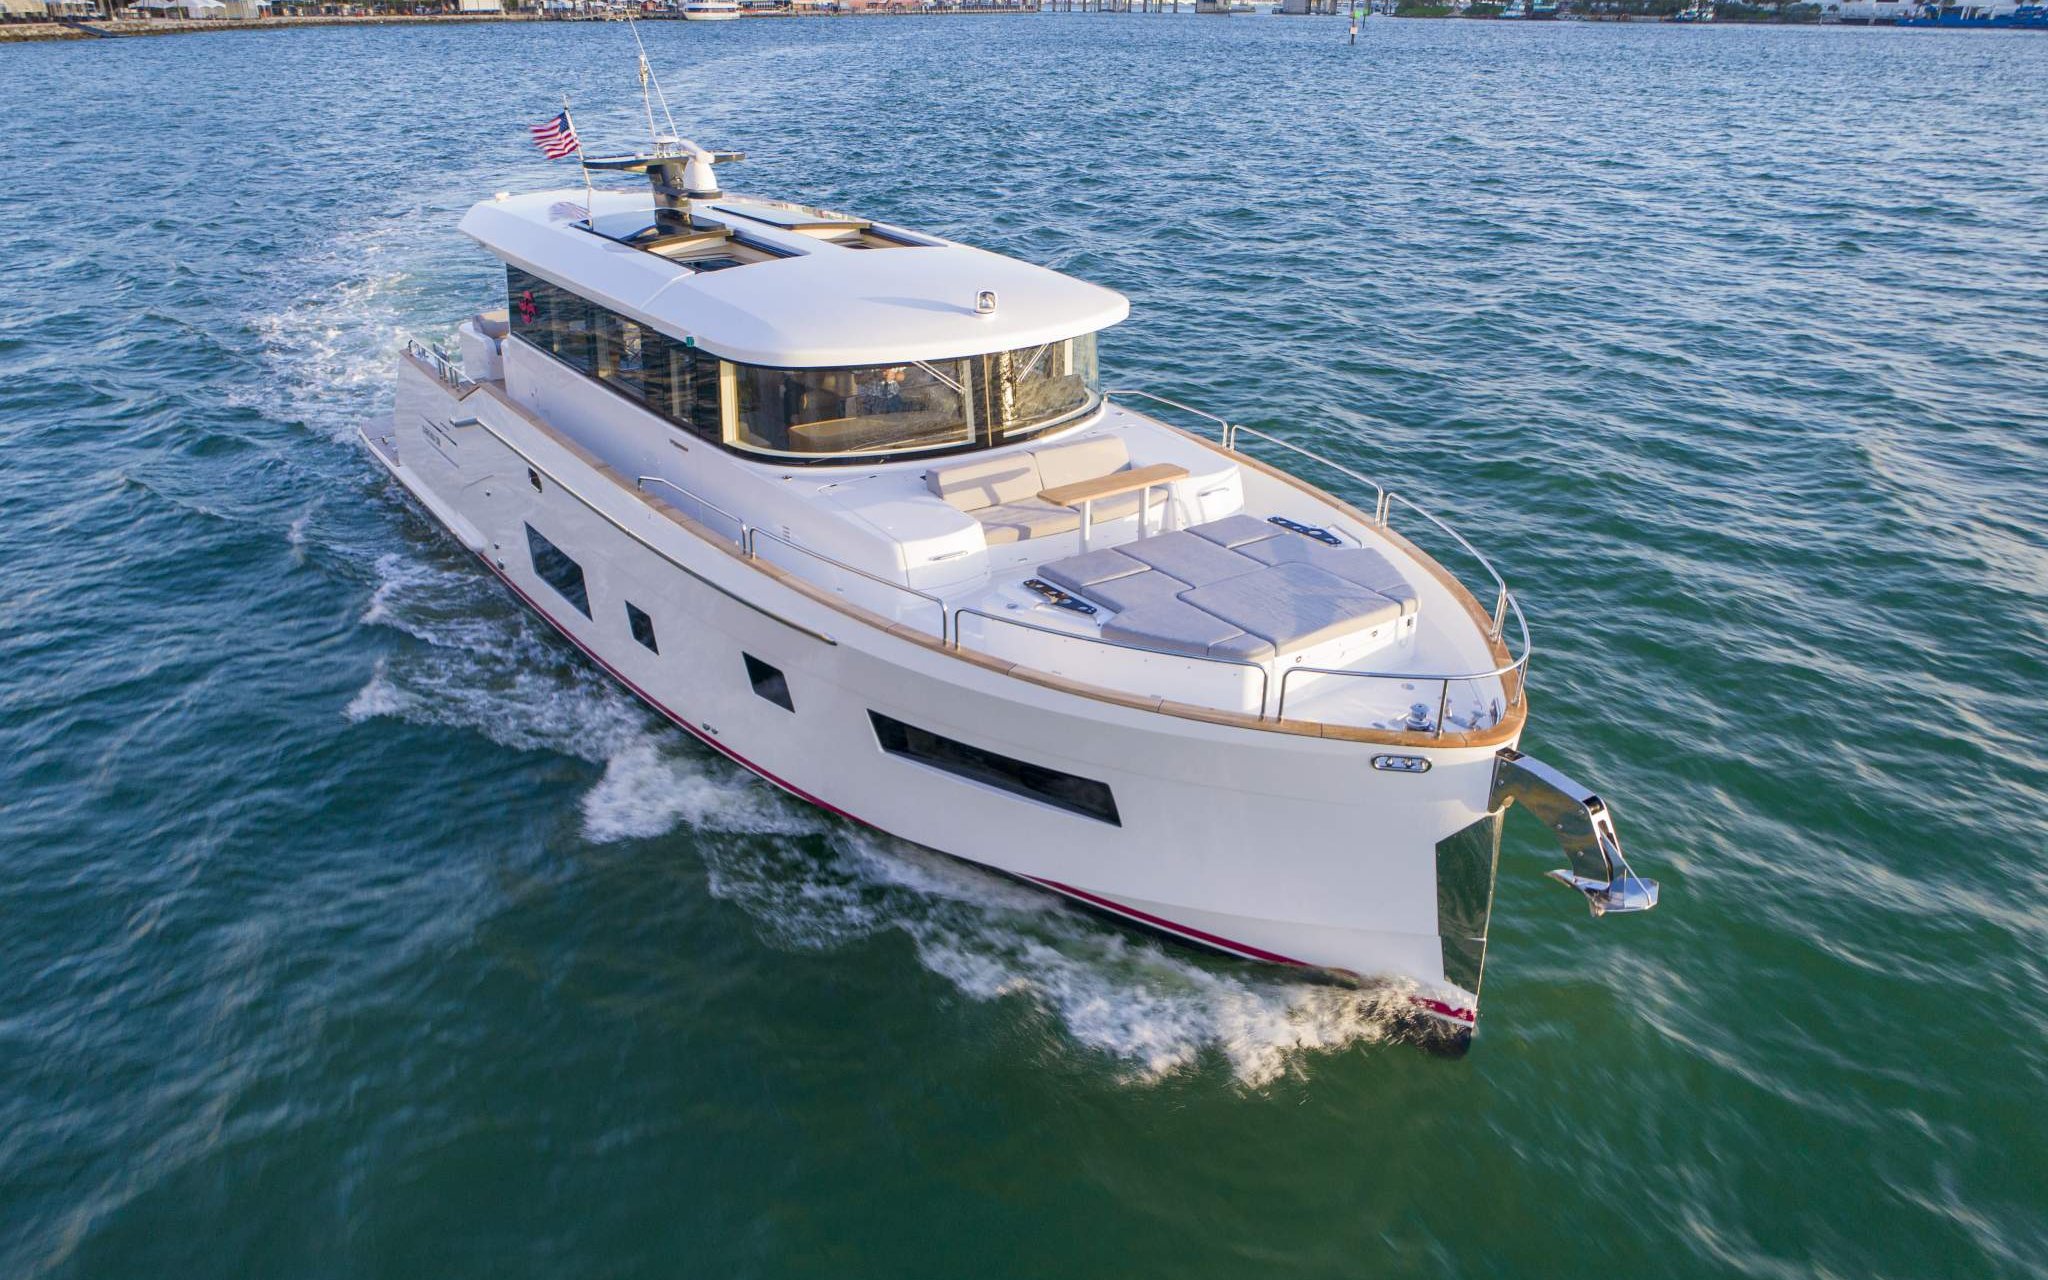 Sirena 58 Coupe, Eyachts Australia and New Zealand